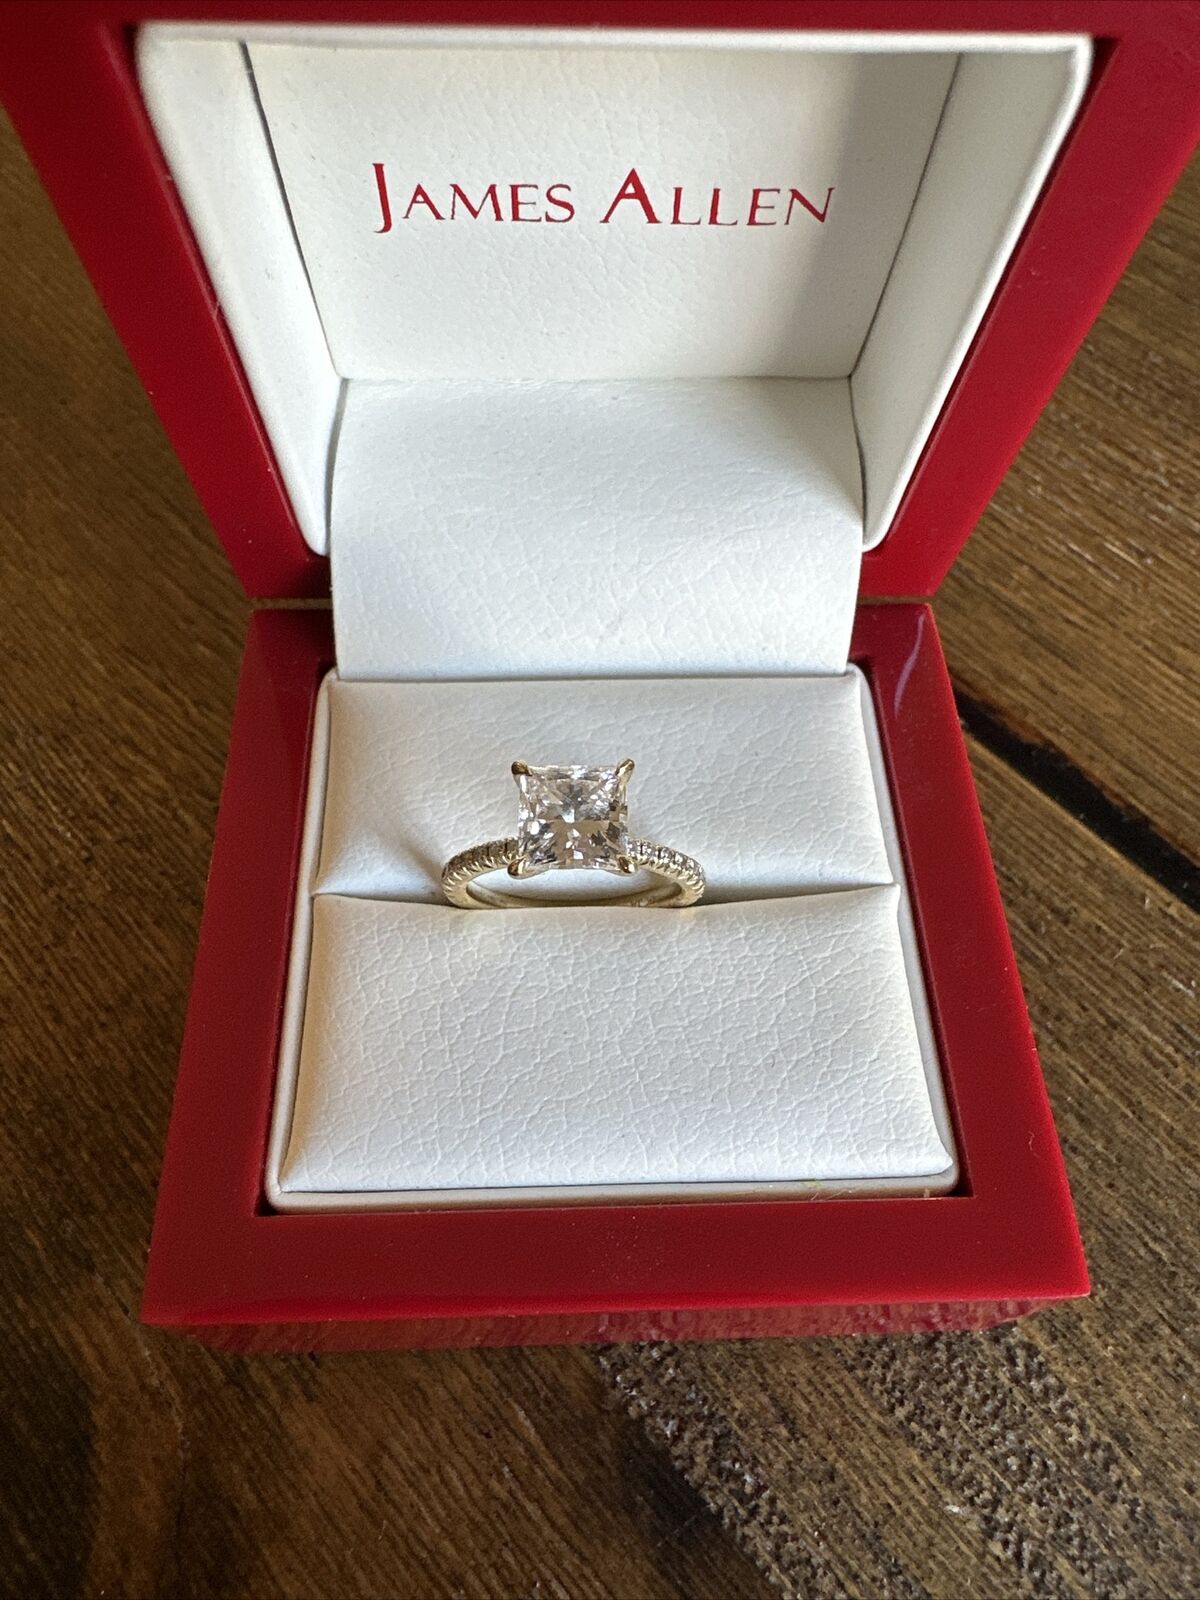 James Allen wedding ring